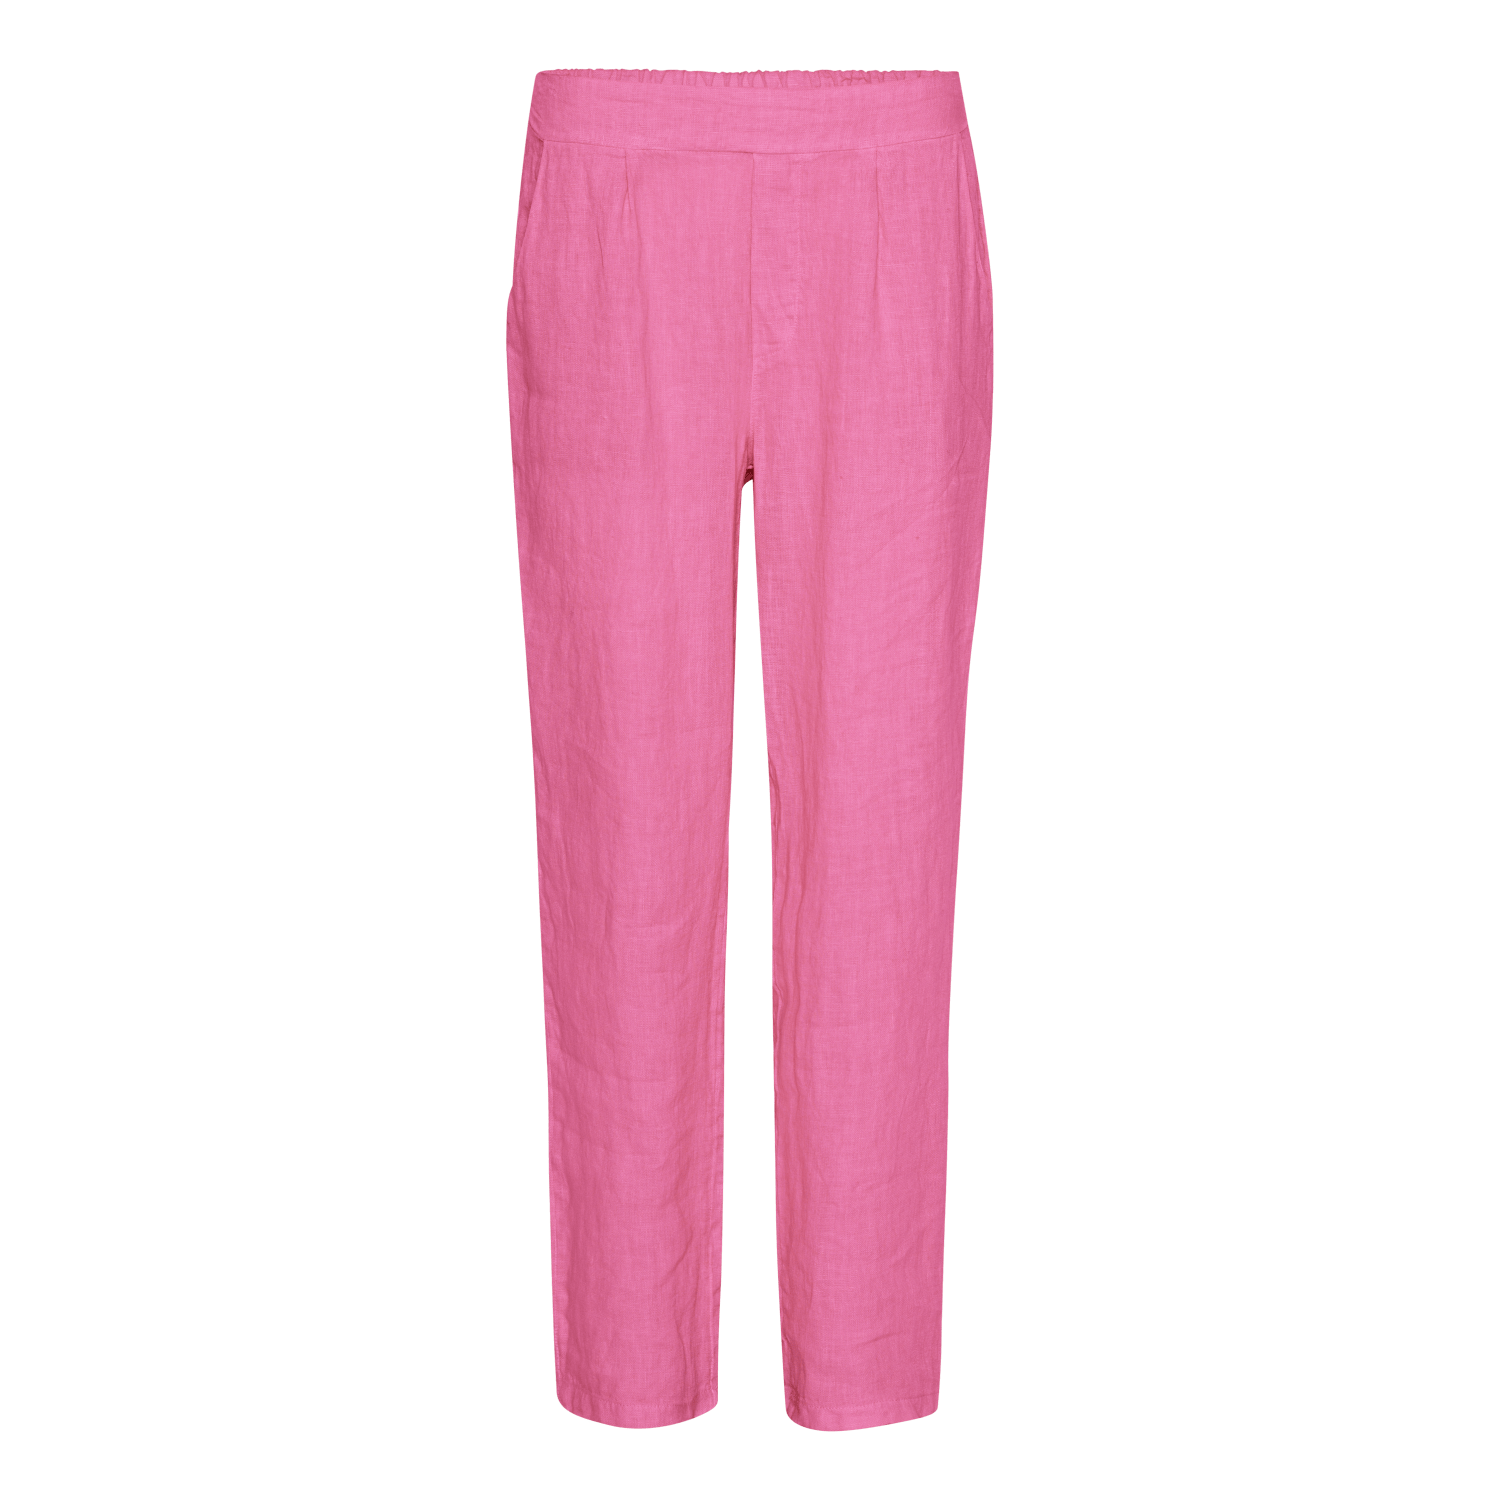 Linen Pants - Pink - Amaze Cph - Pink - S/M